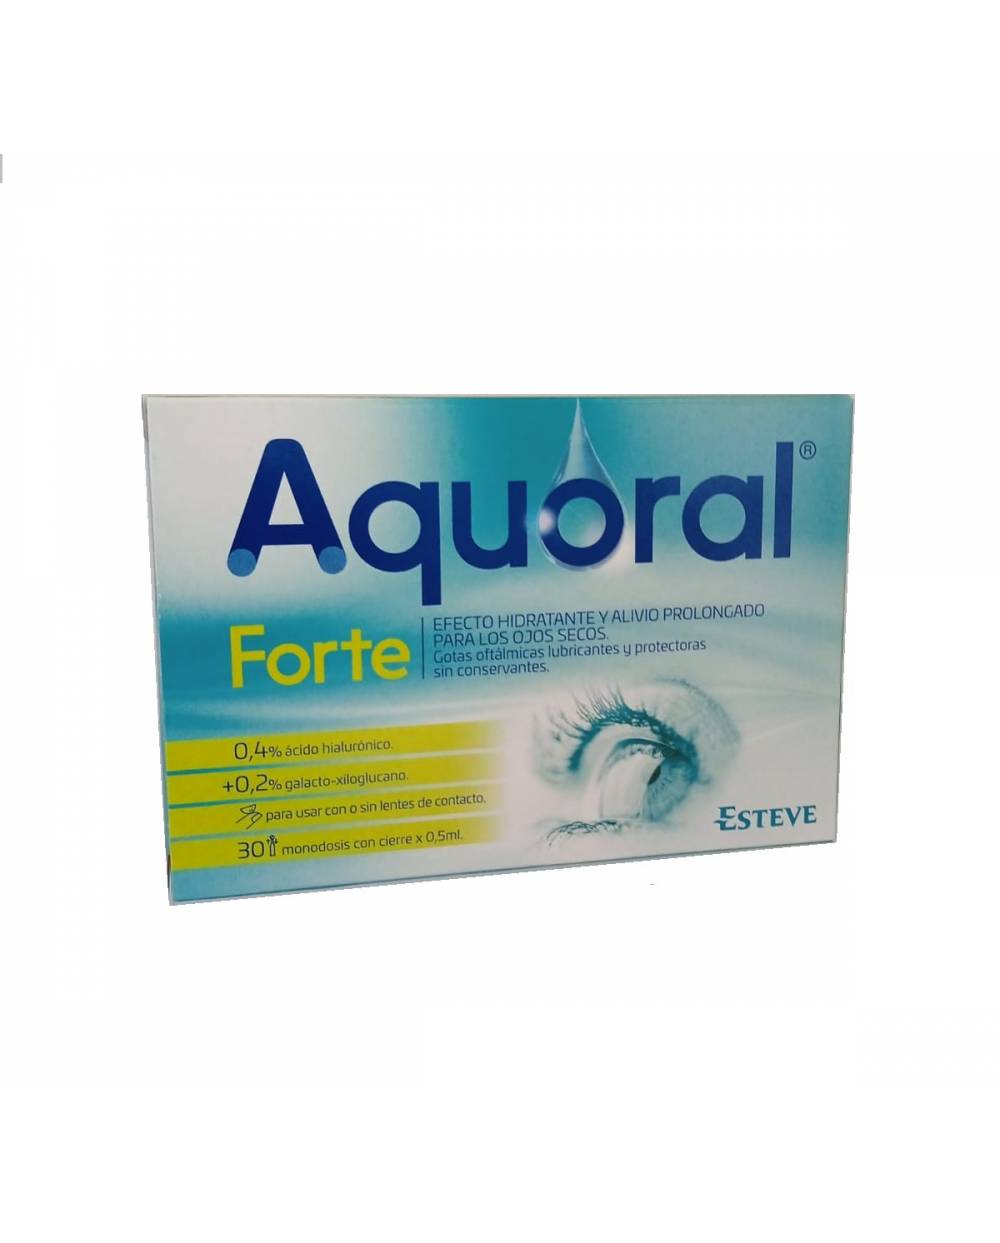 Aquoral, Aquoral Forte gotas oftálmicas ácido hialurónico 0,4% 30  monodosis, Farmacias 1000